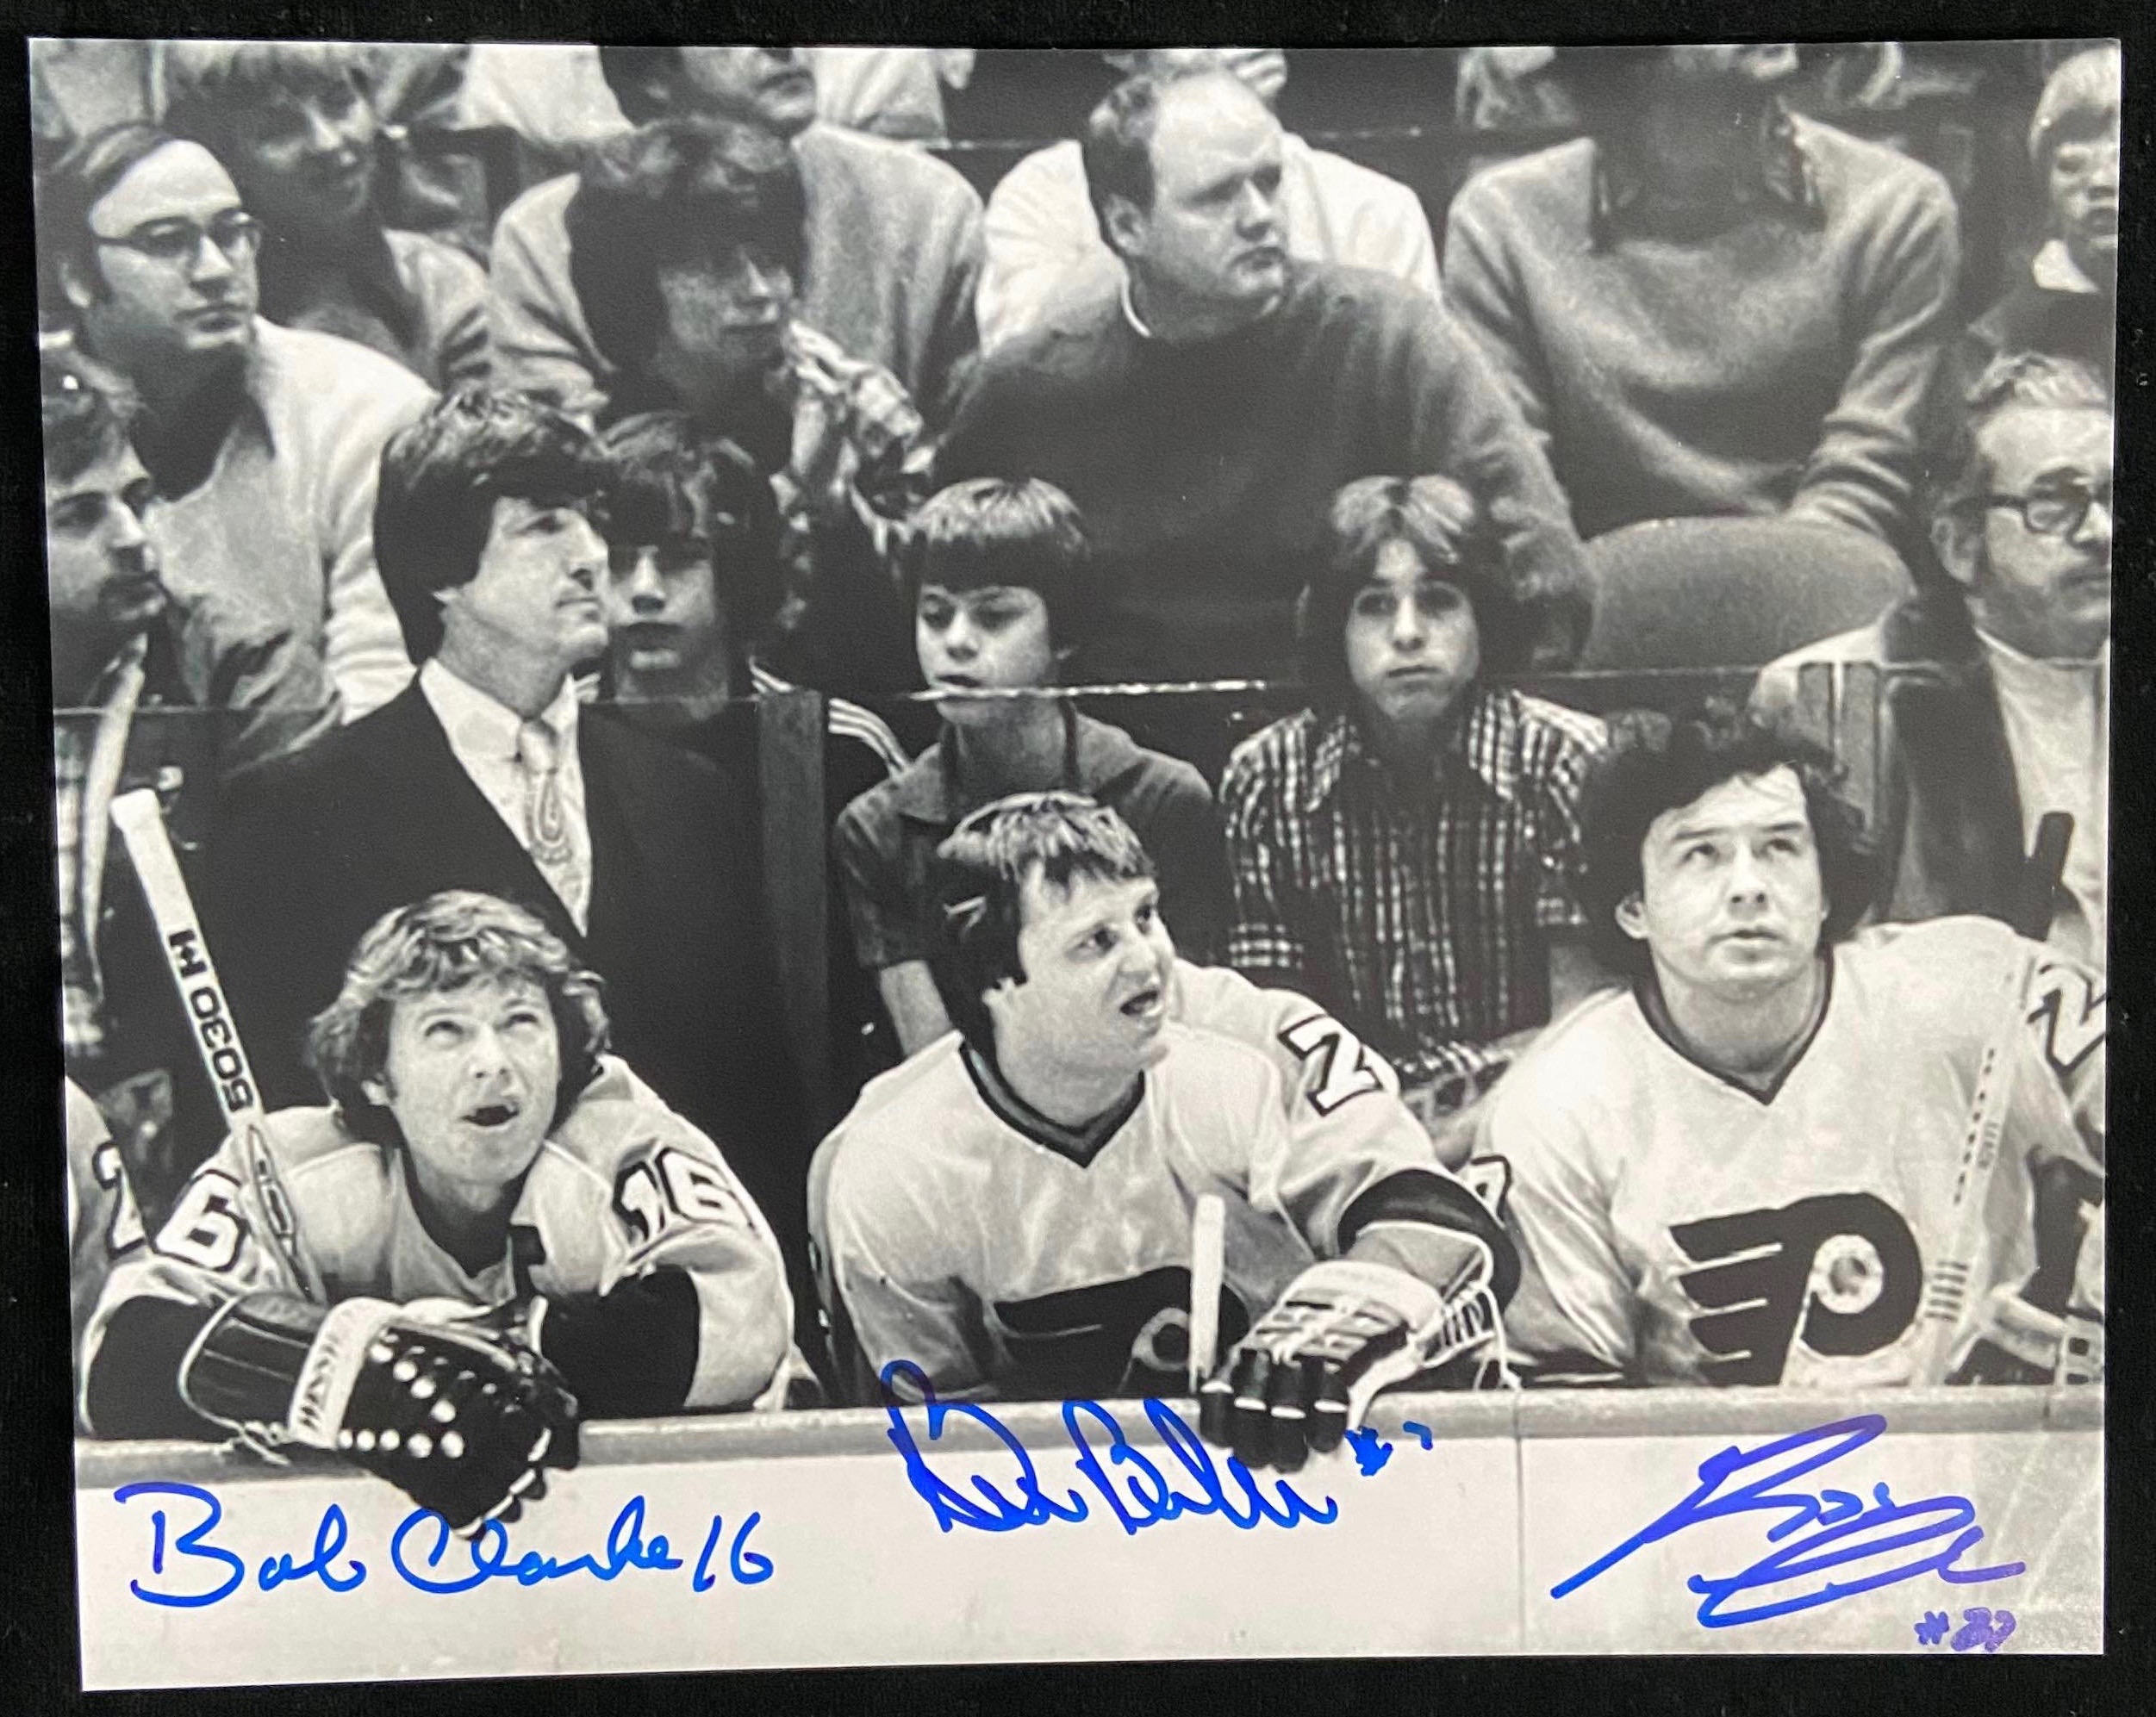 Bobby Clarke Philadelphia Flyers All-Star Autographed 8x10 Photo